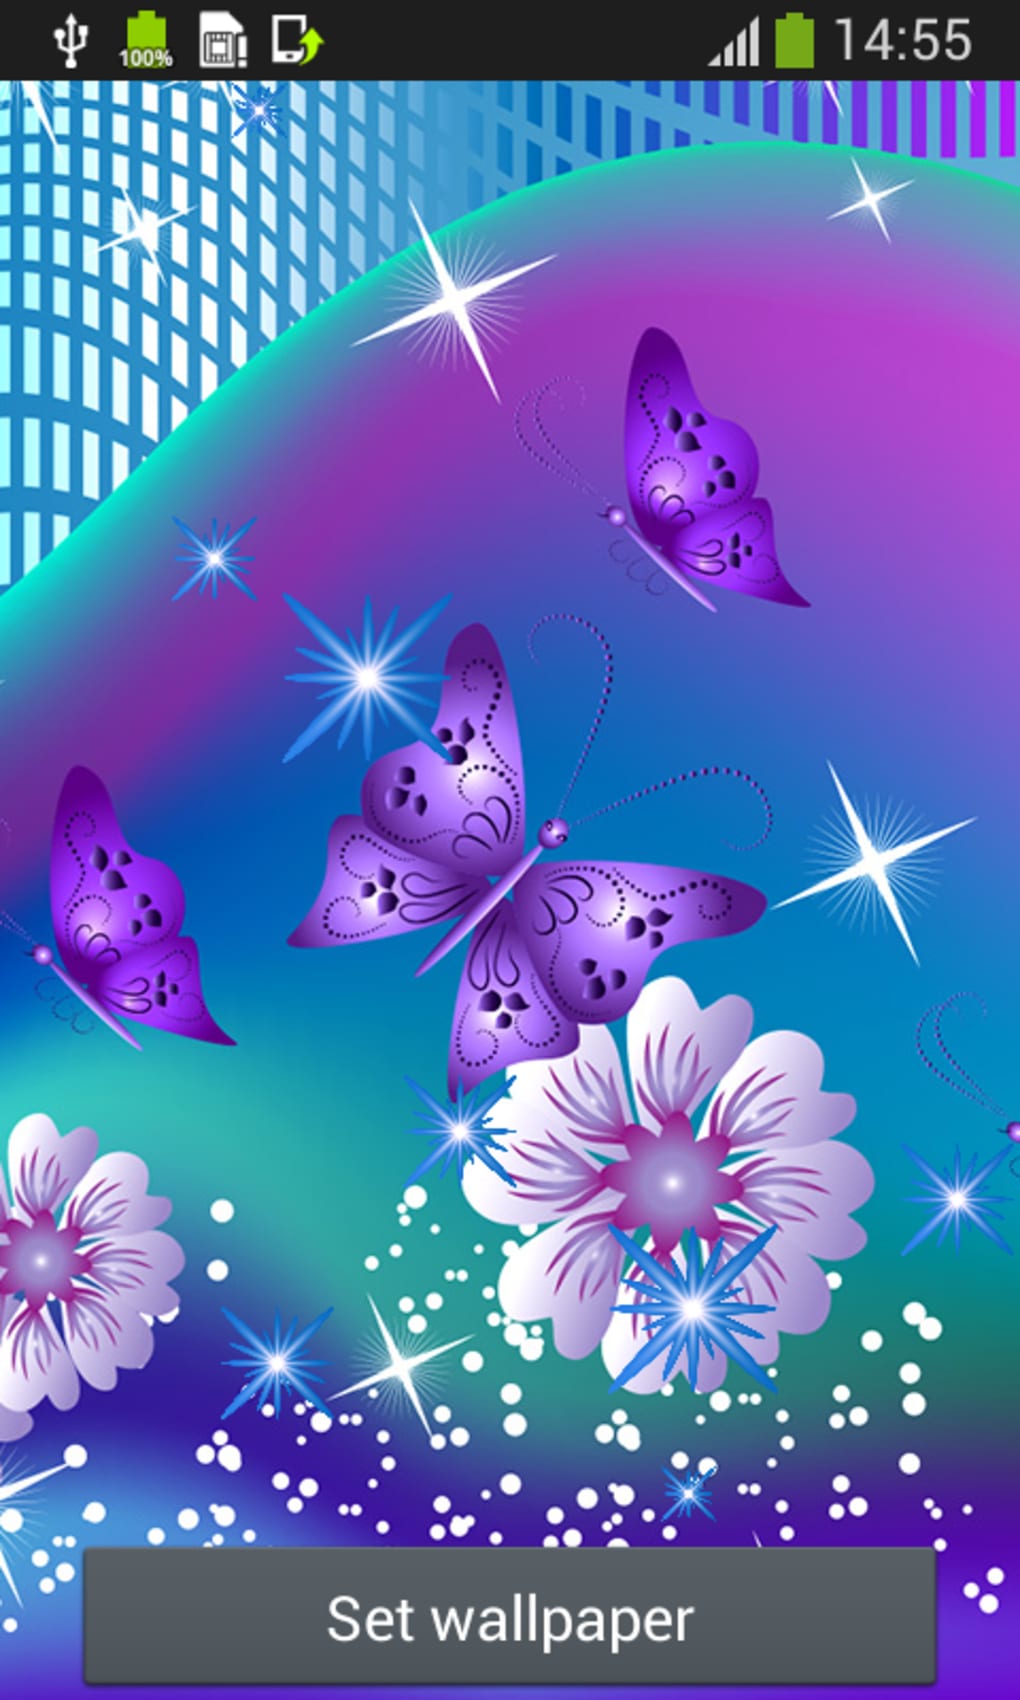 set wallpaper,violet,purple,butterfly,organism,graphic design